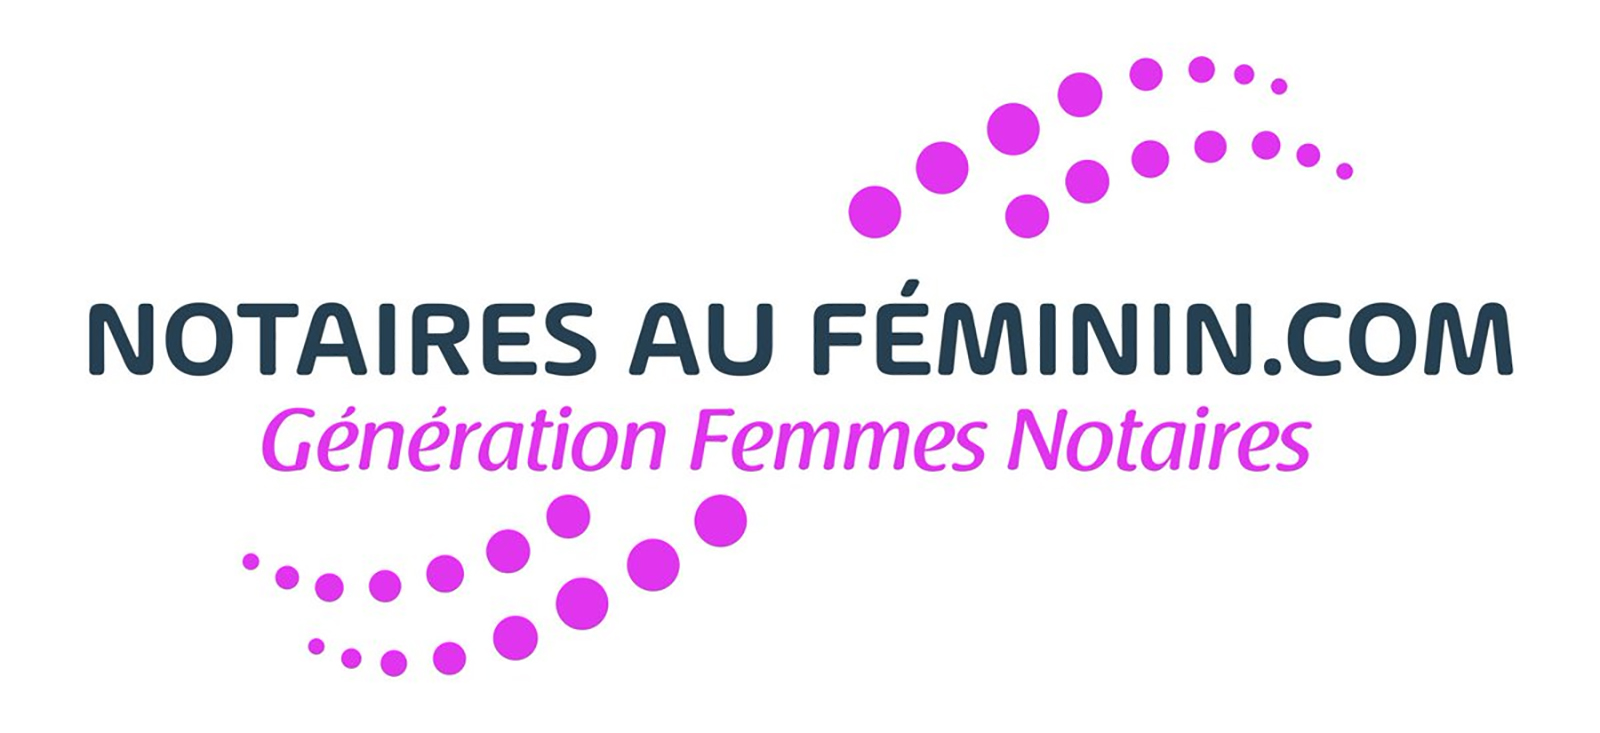 NOTAIRES AU FEMININ.COM